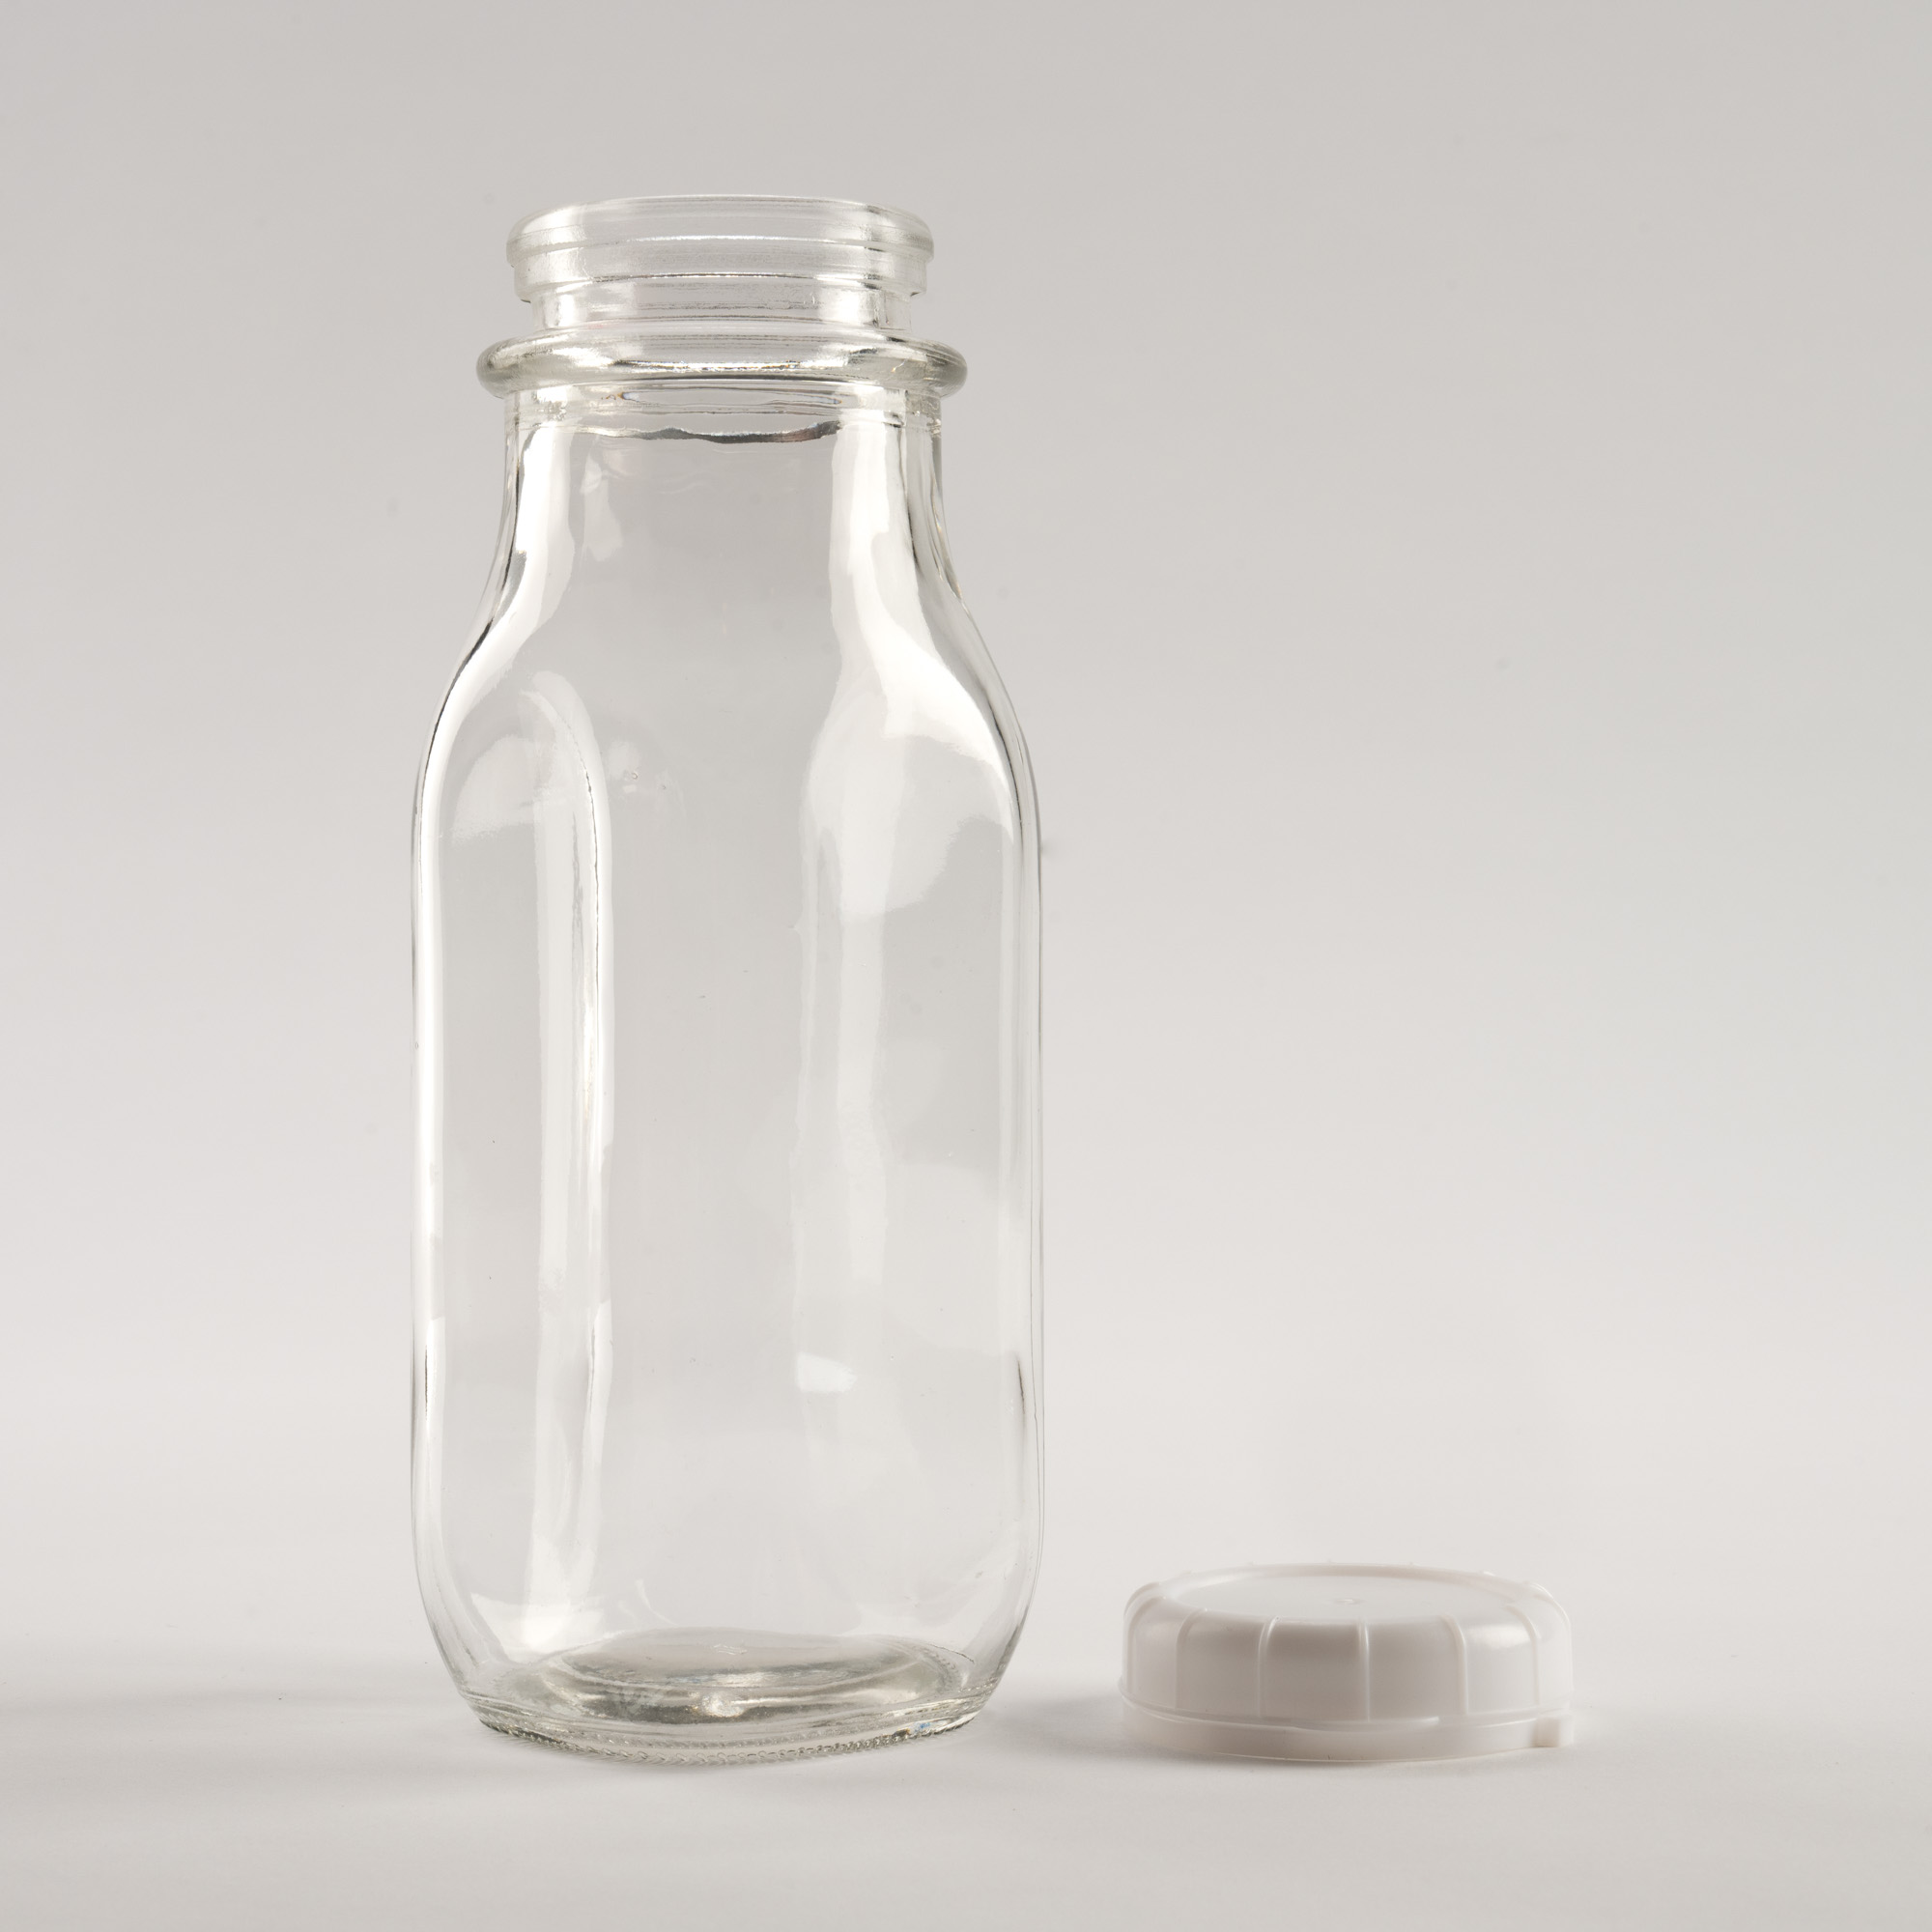 12 oz Glass Bottle w/Cap - 6 pack